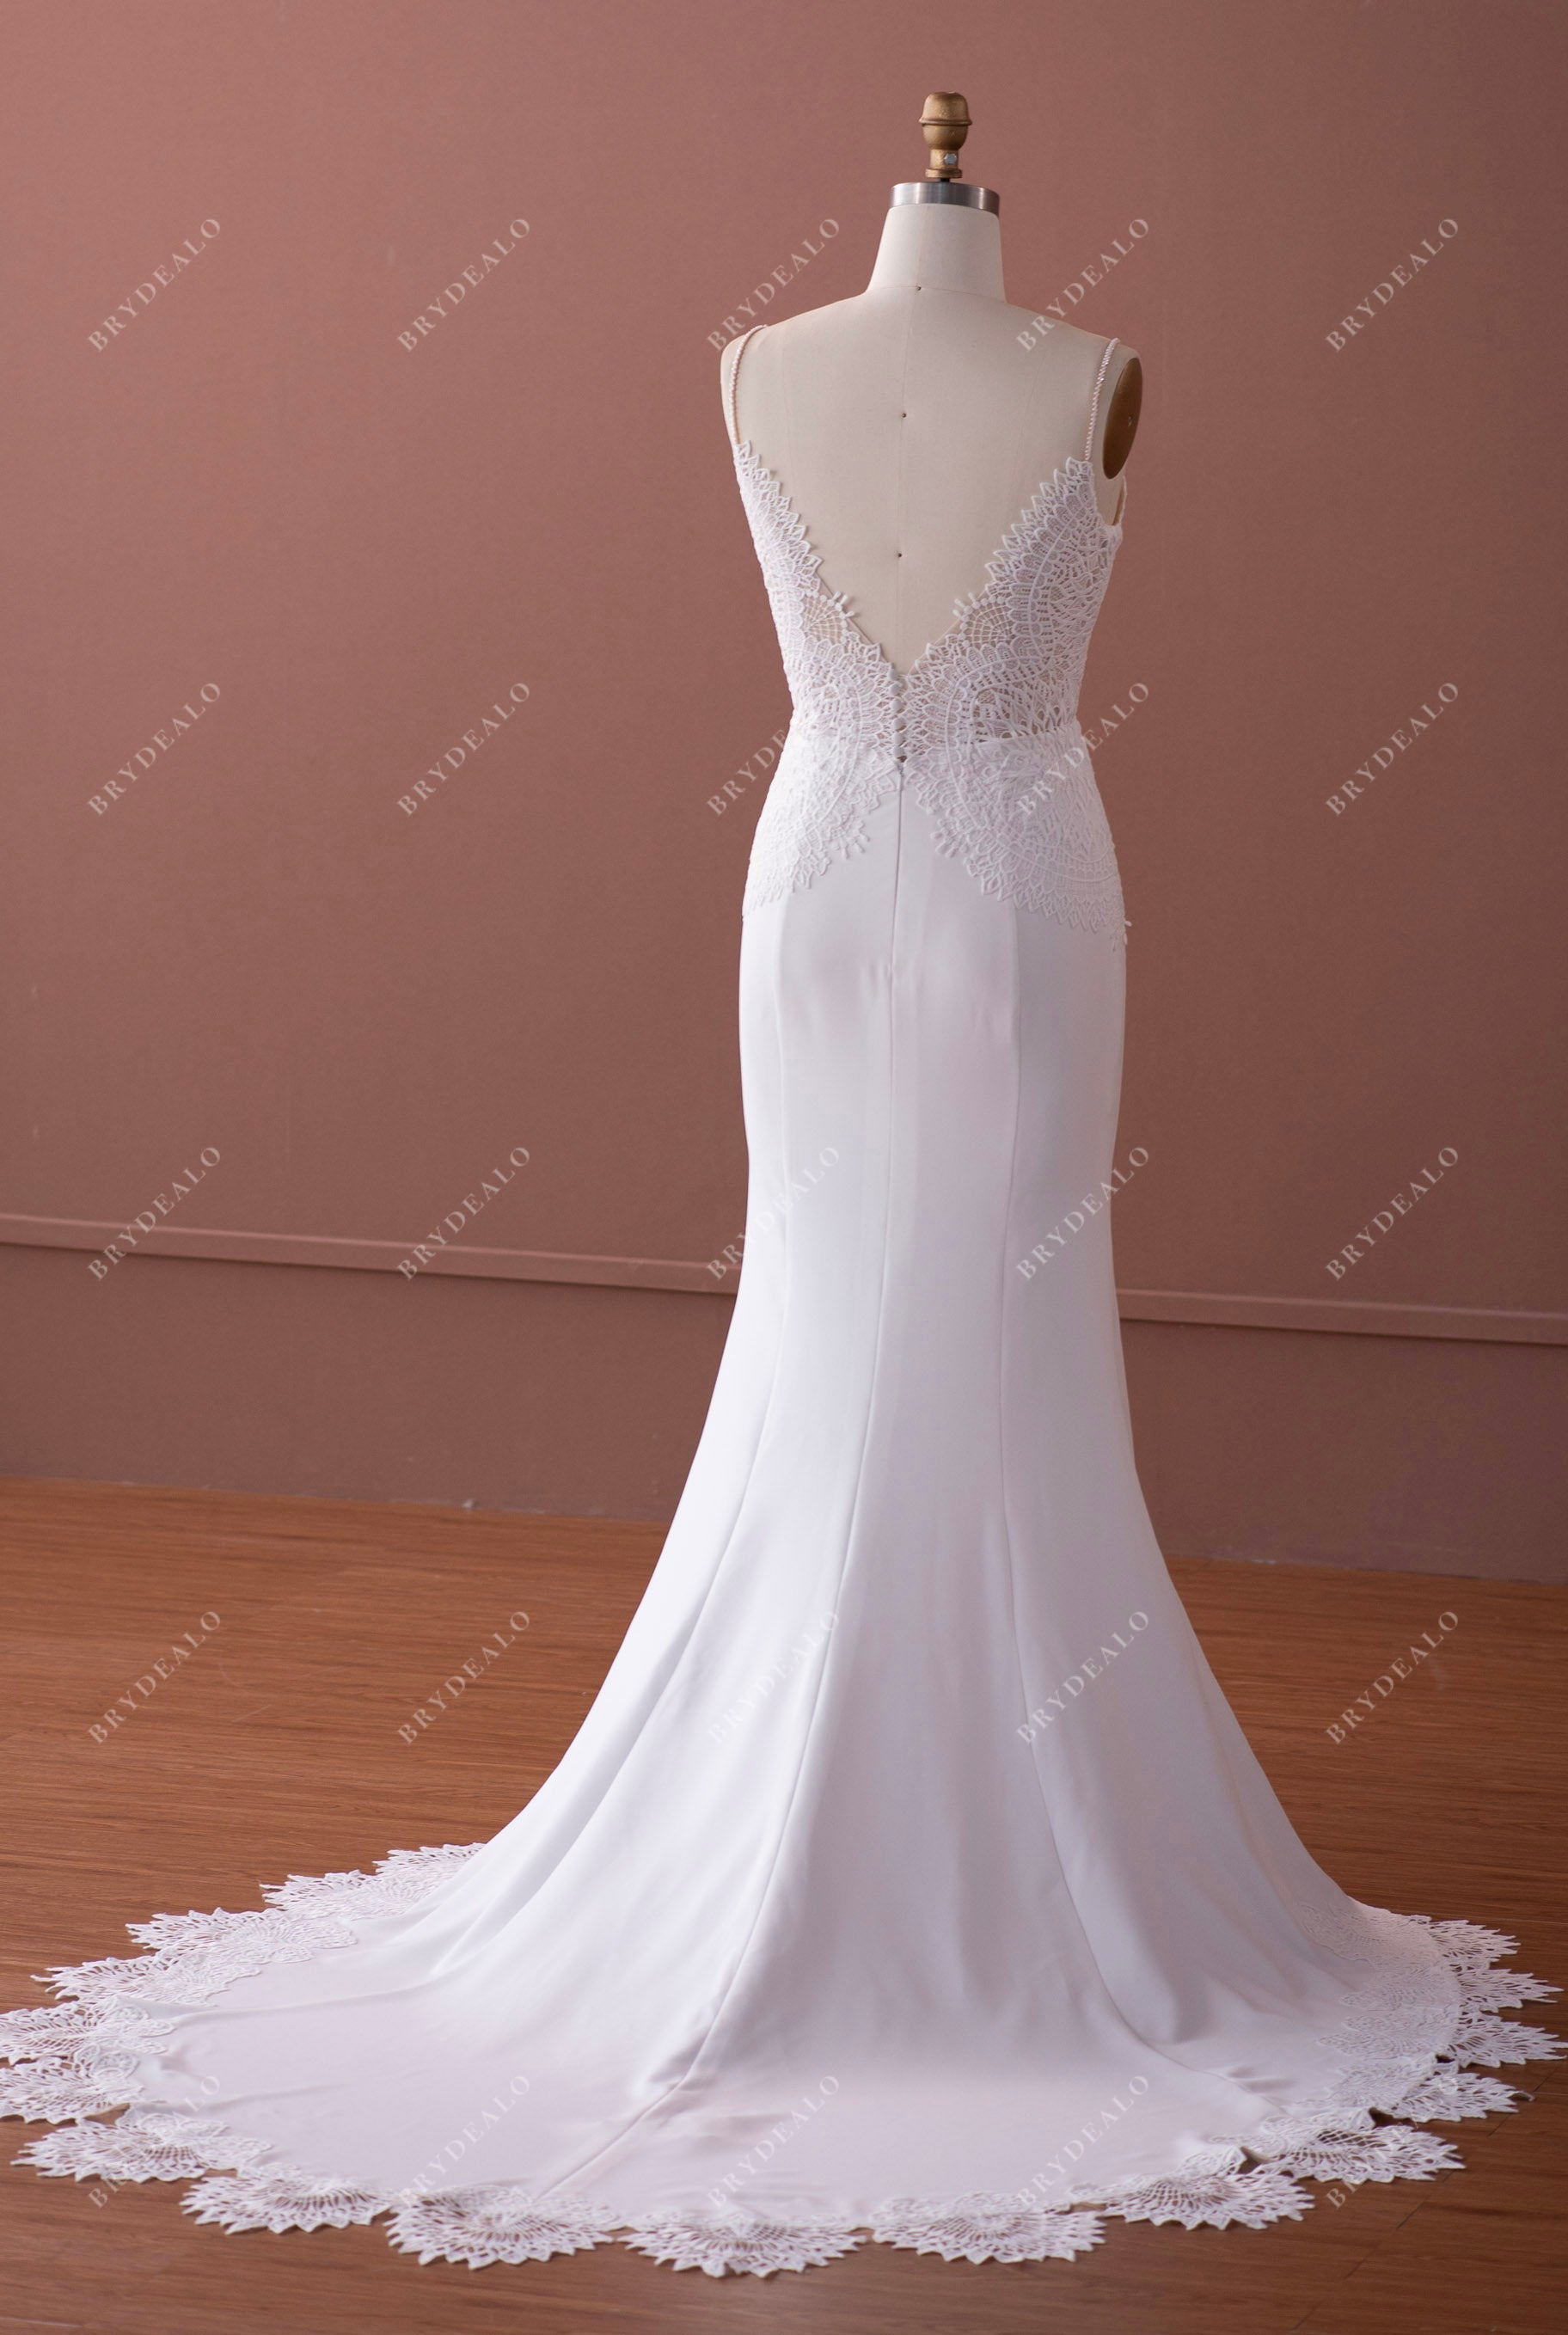 scalloped lace crepe train wedding dress